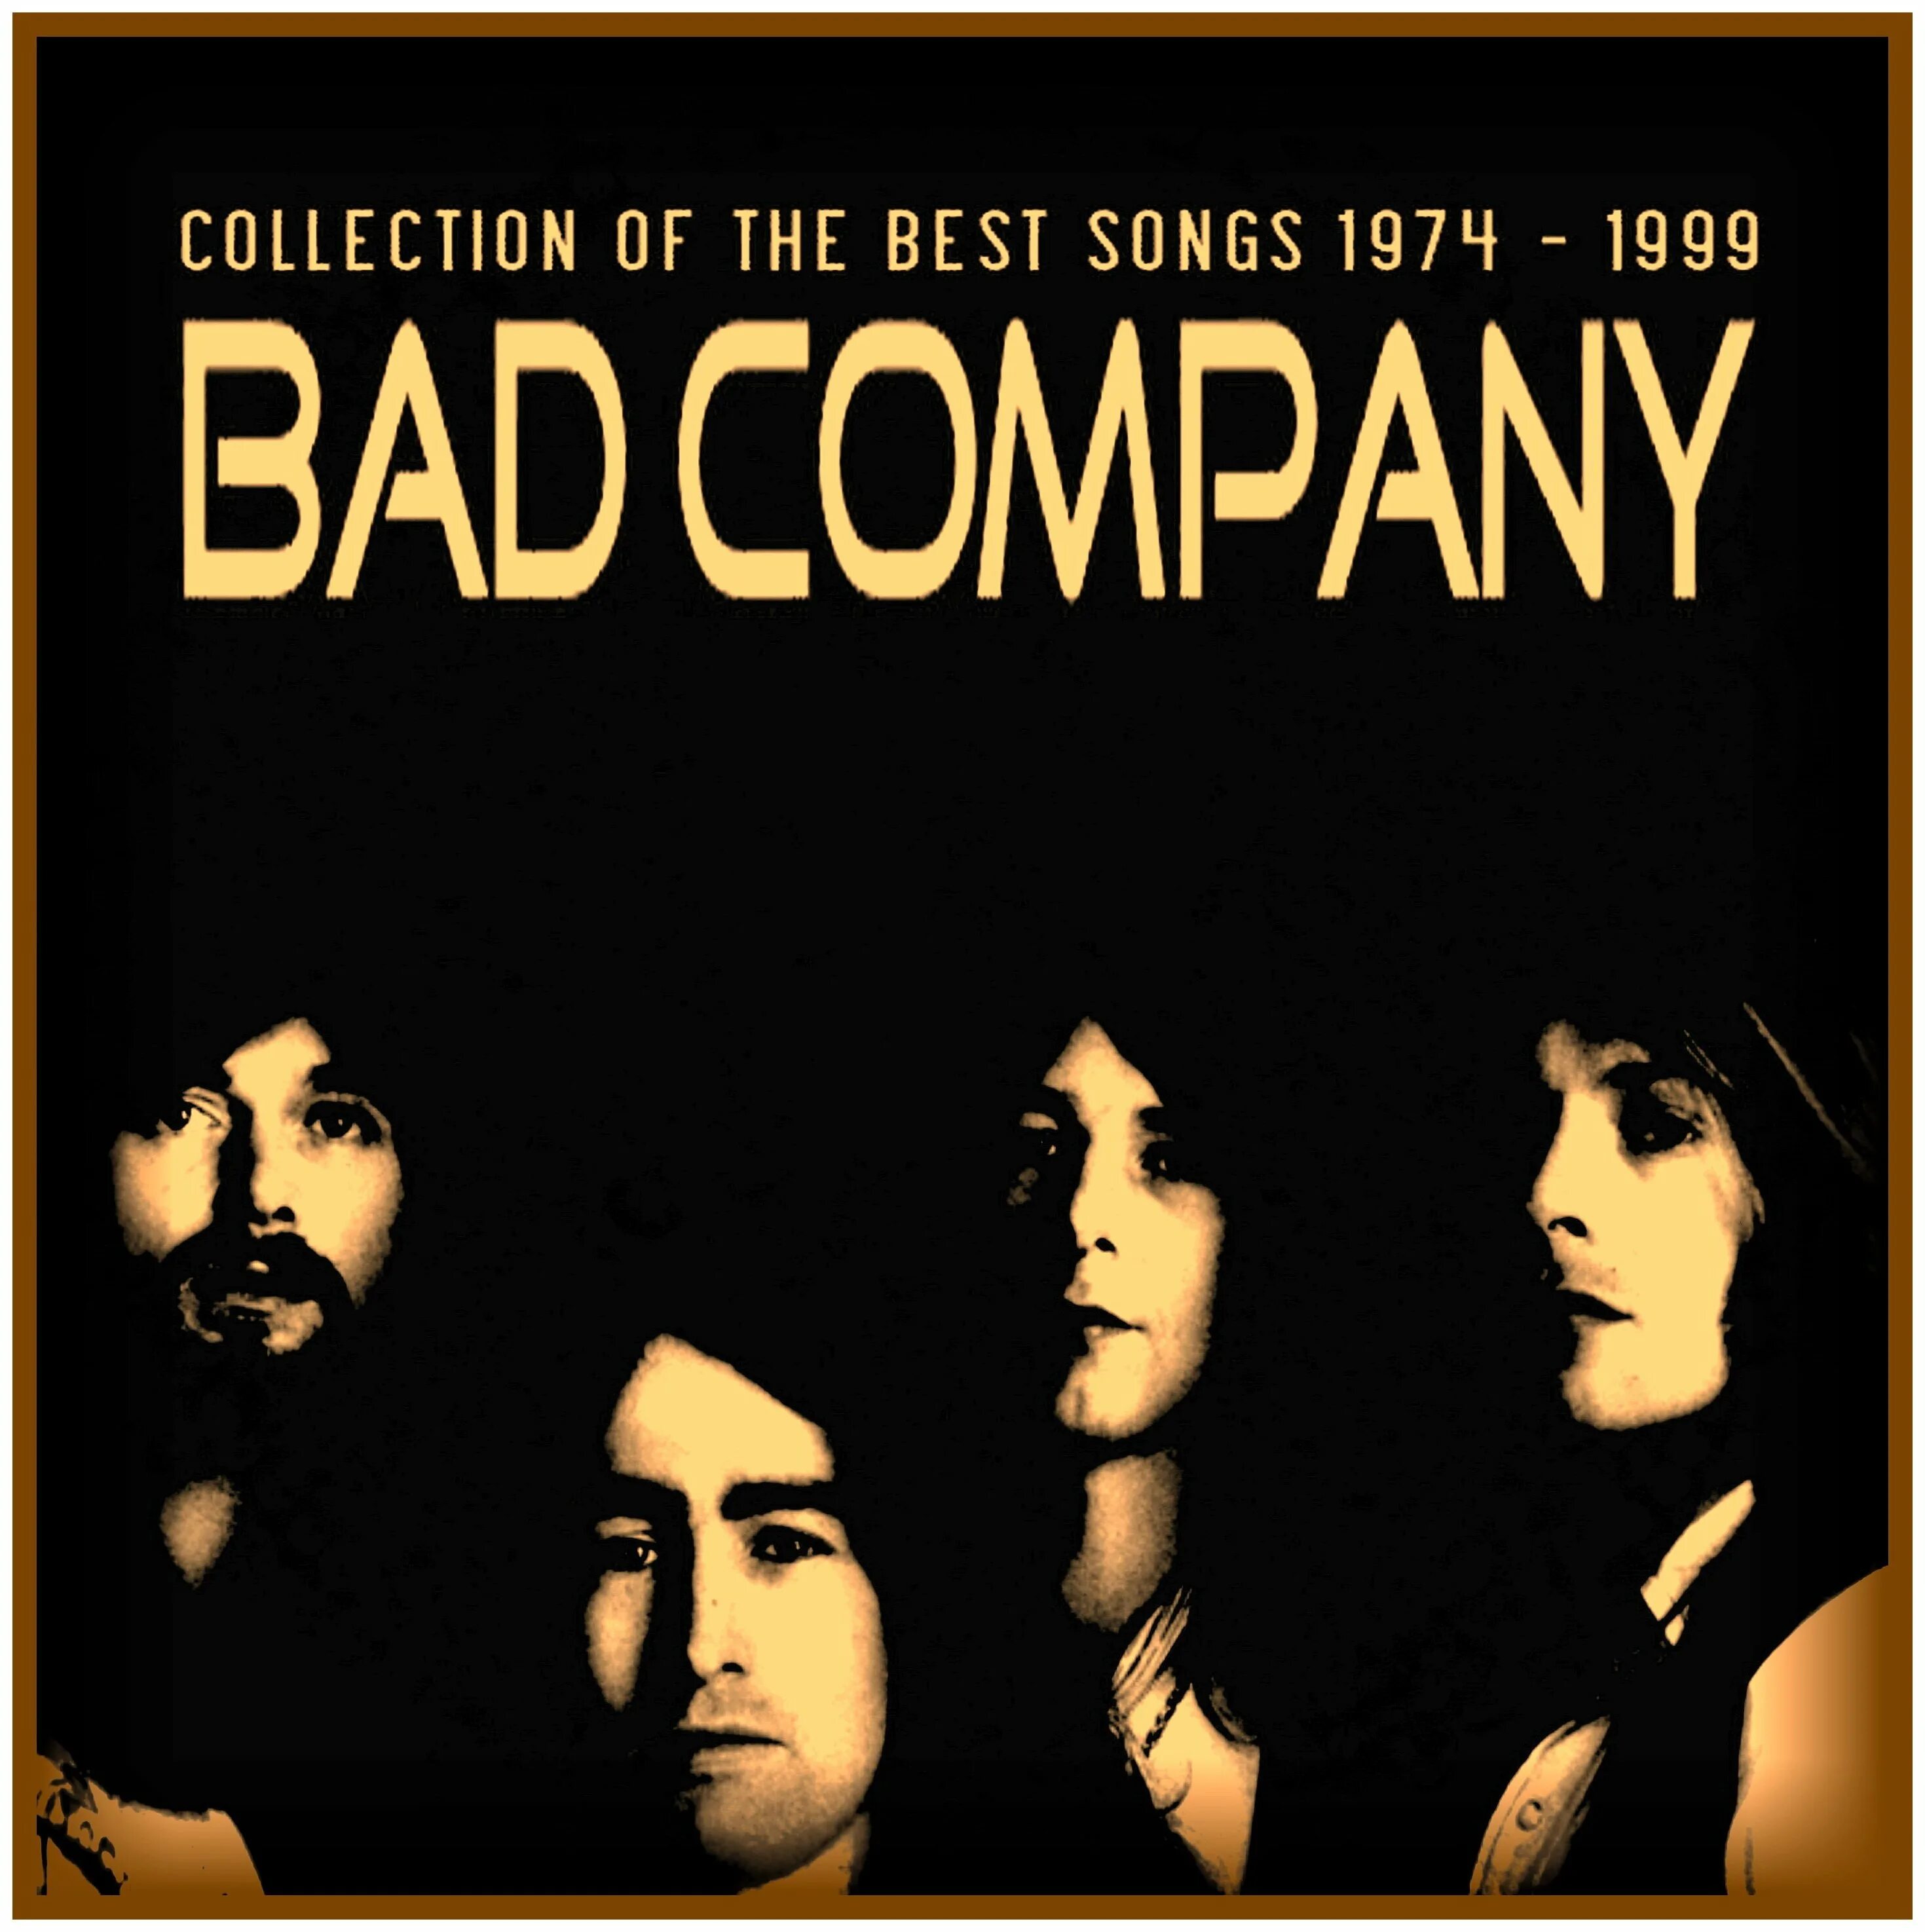 Bad Company album 1974. Группа Bad Company альбомы. Bad Company 1999. Bad Company collection of the best Songs 1974-1999 4cd 2011. Co collection